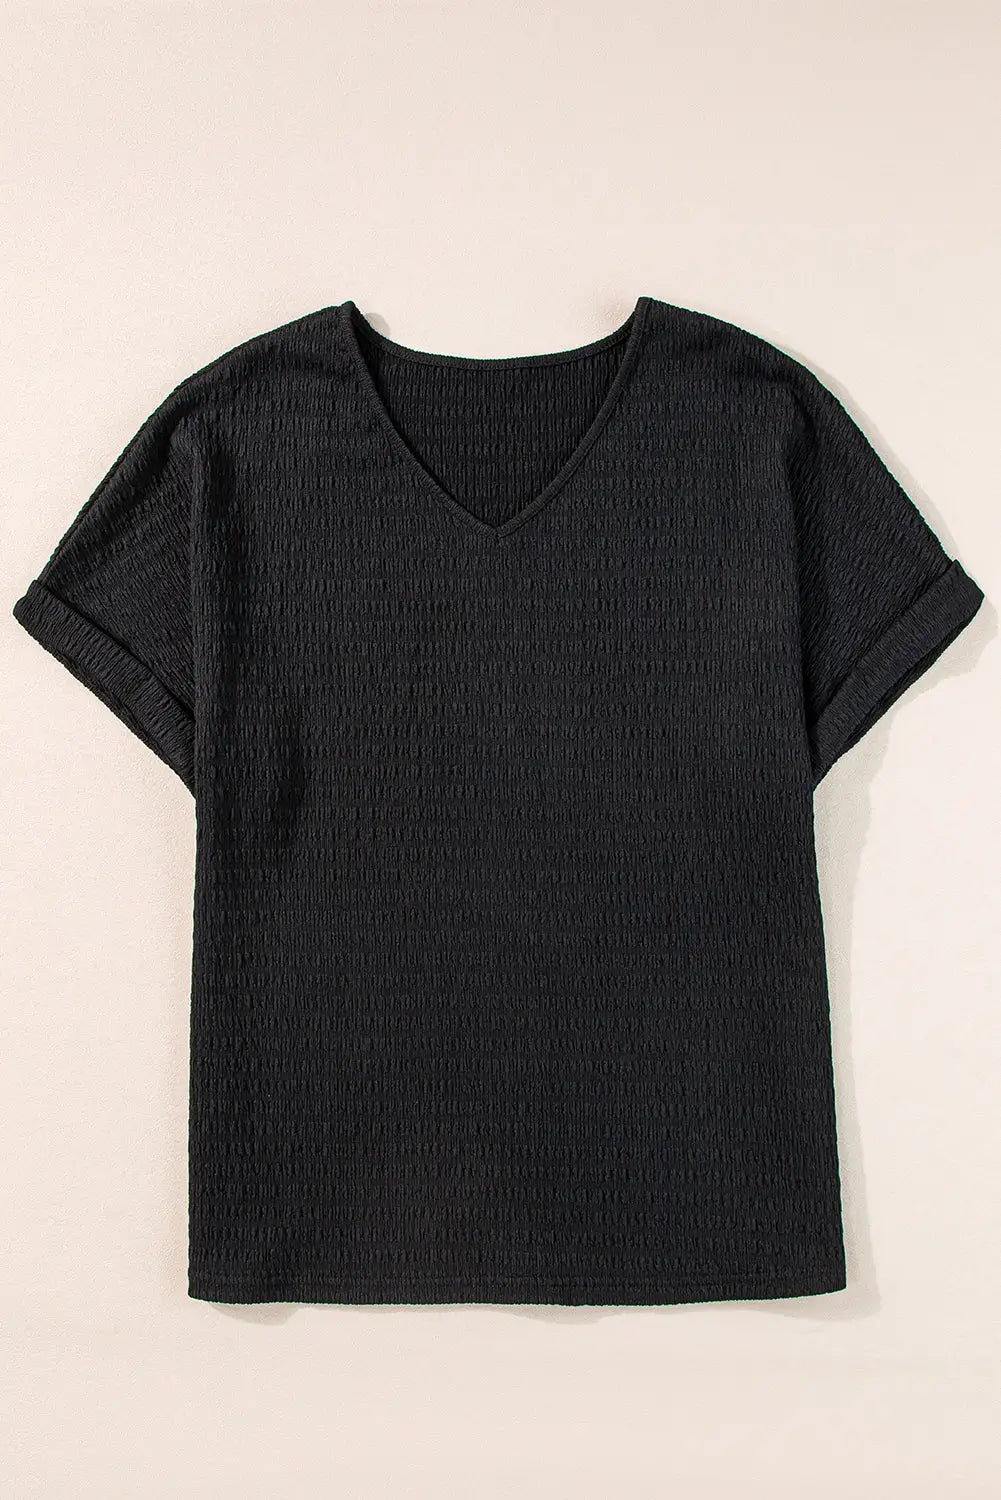 Black textured short sleeve v neck tee - tops/tops & tees